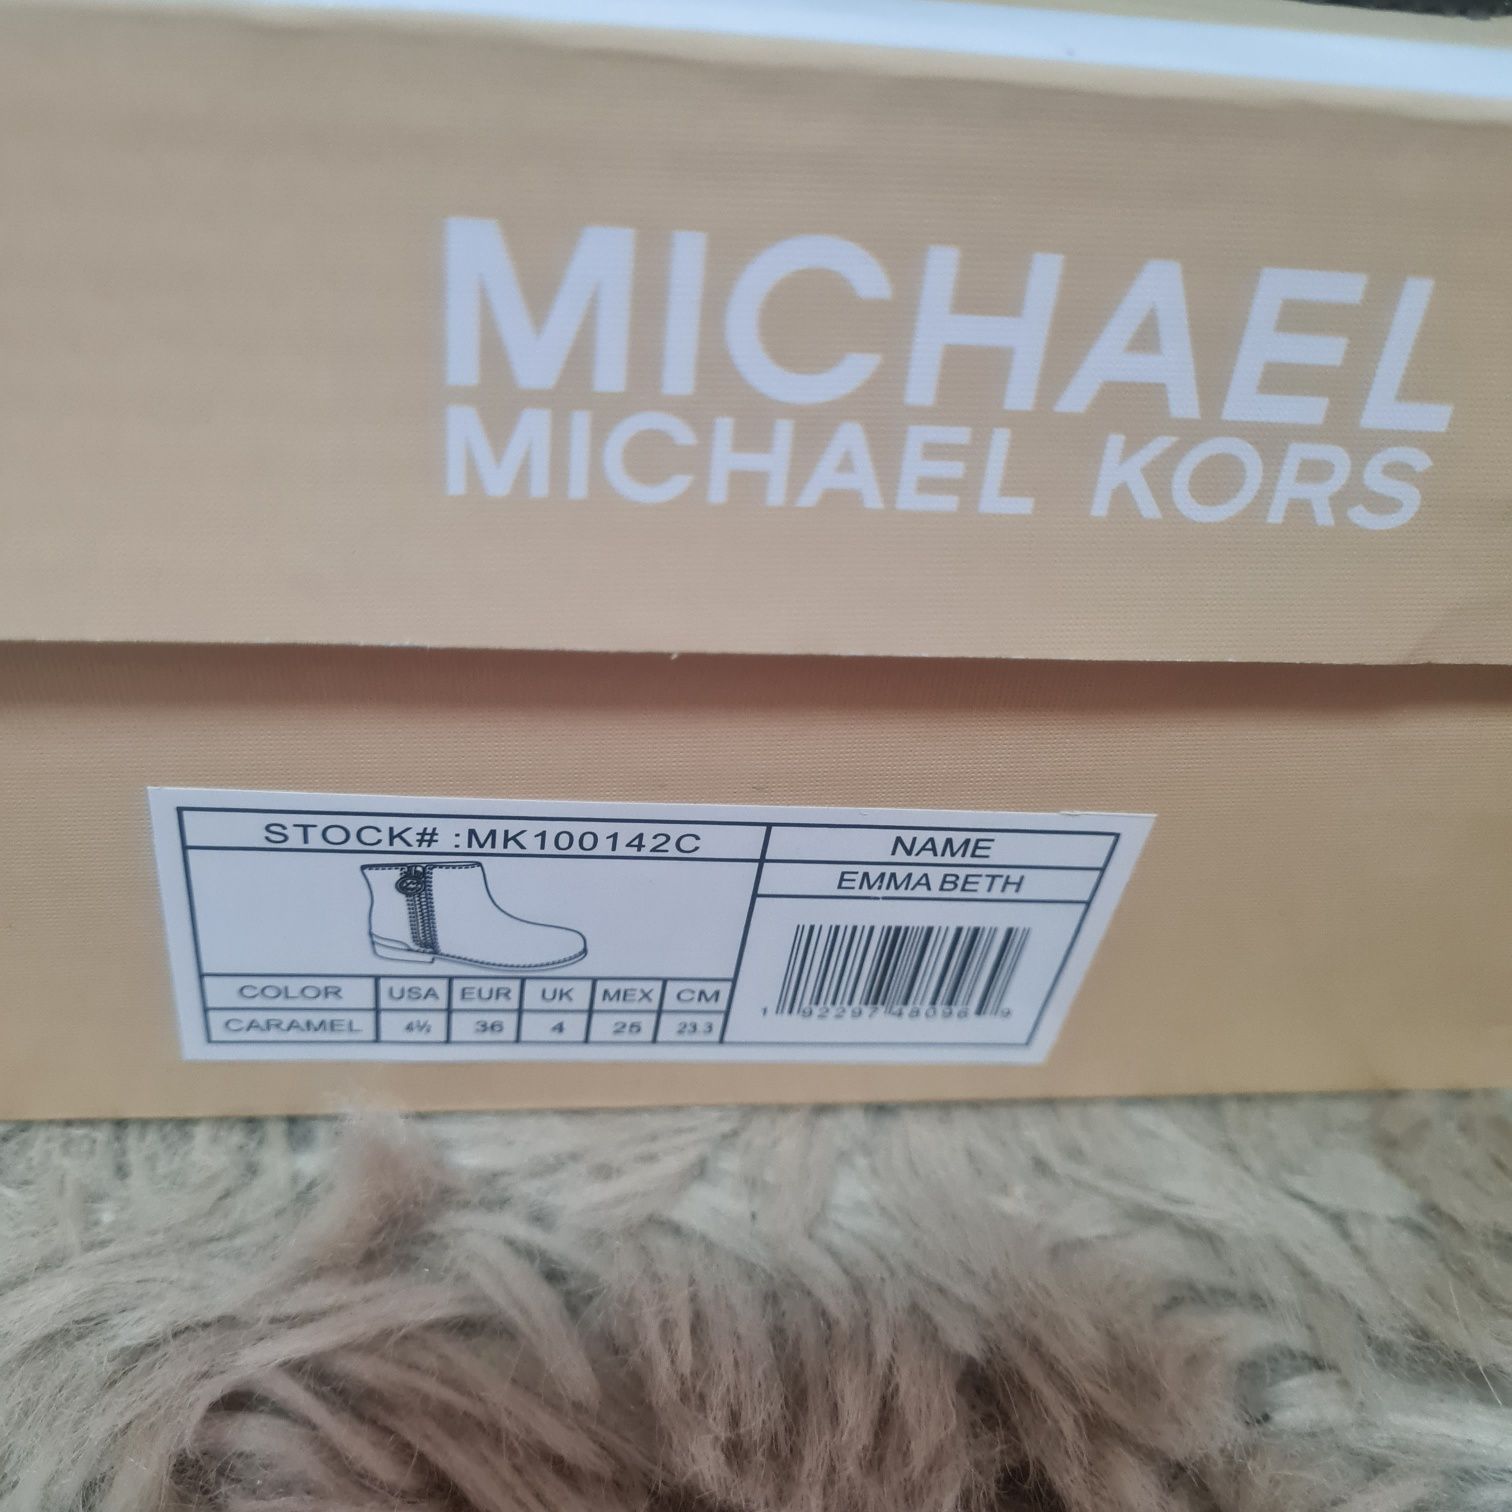 Michael Kors botki sztybety zimowe emma Beth caramel r. 36 nowe w pude